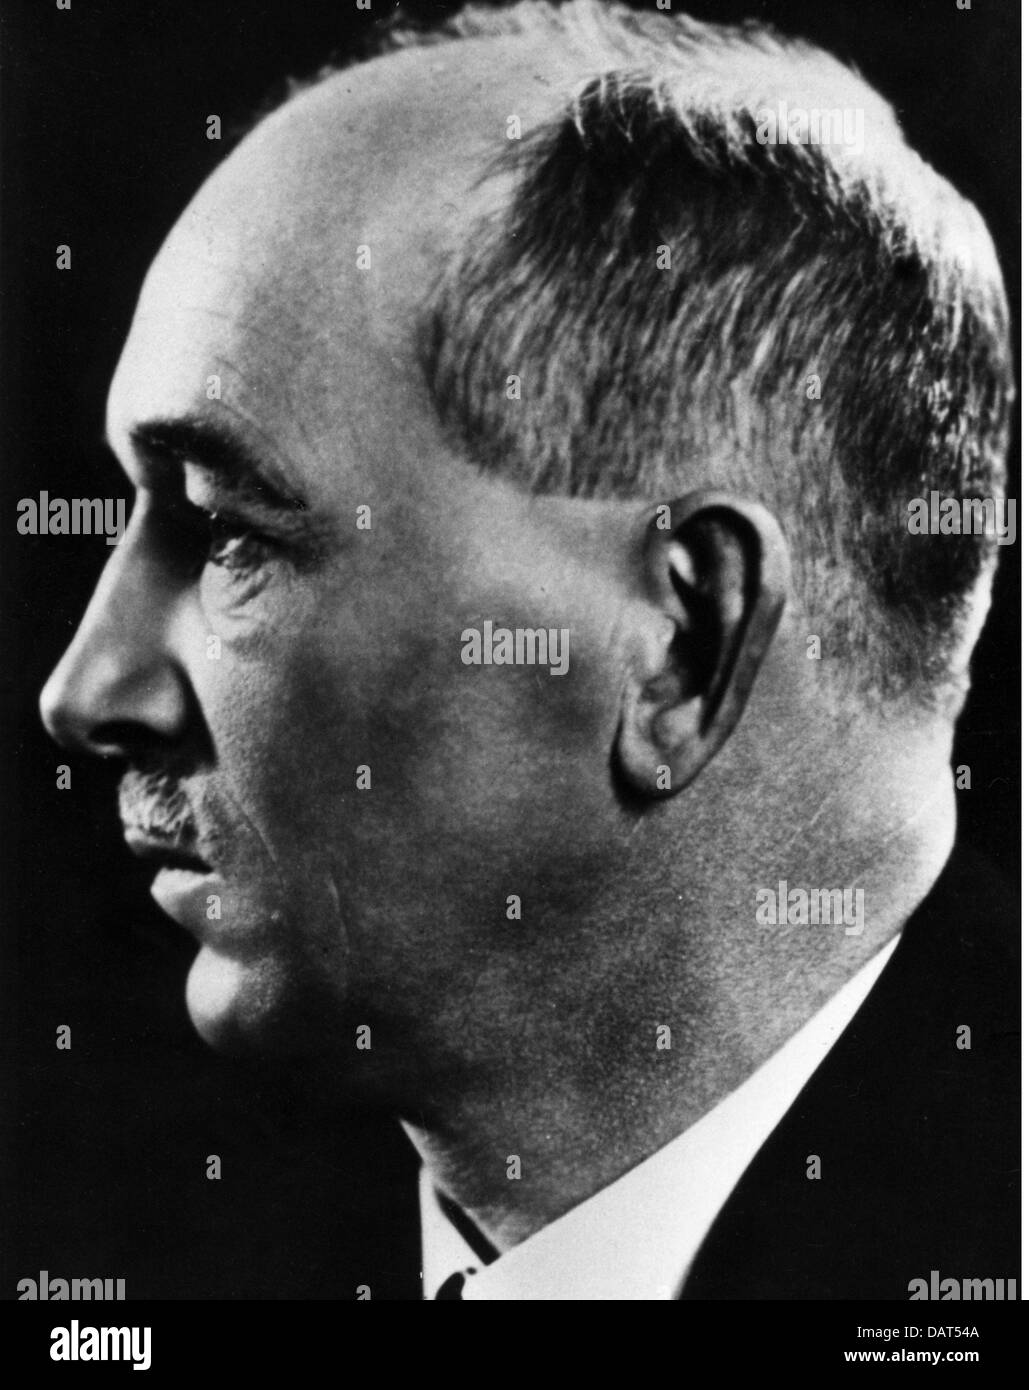 Benes, Edvard, 28.5.1884 - 3.9 1948, Czech politician (CSNC), President of Czechoslovakia 18.12.1935 - 5.10.1938, Portrait, 1930s,  , Stock Photo